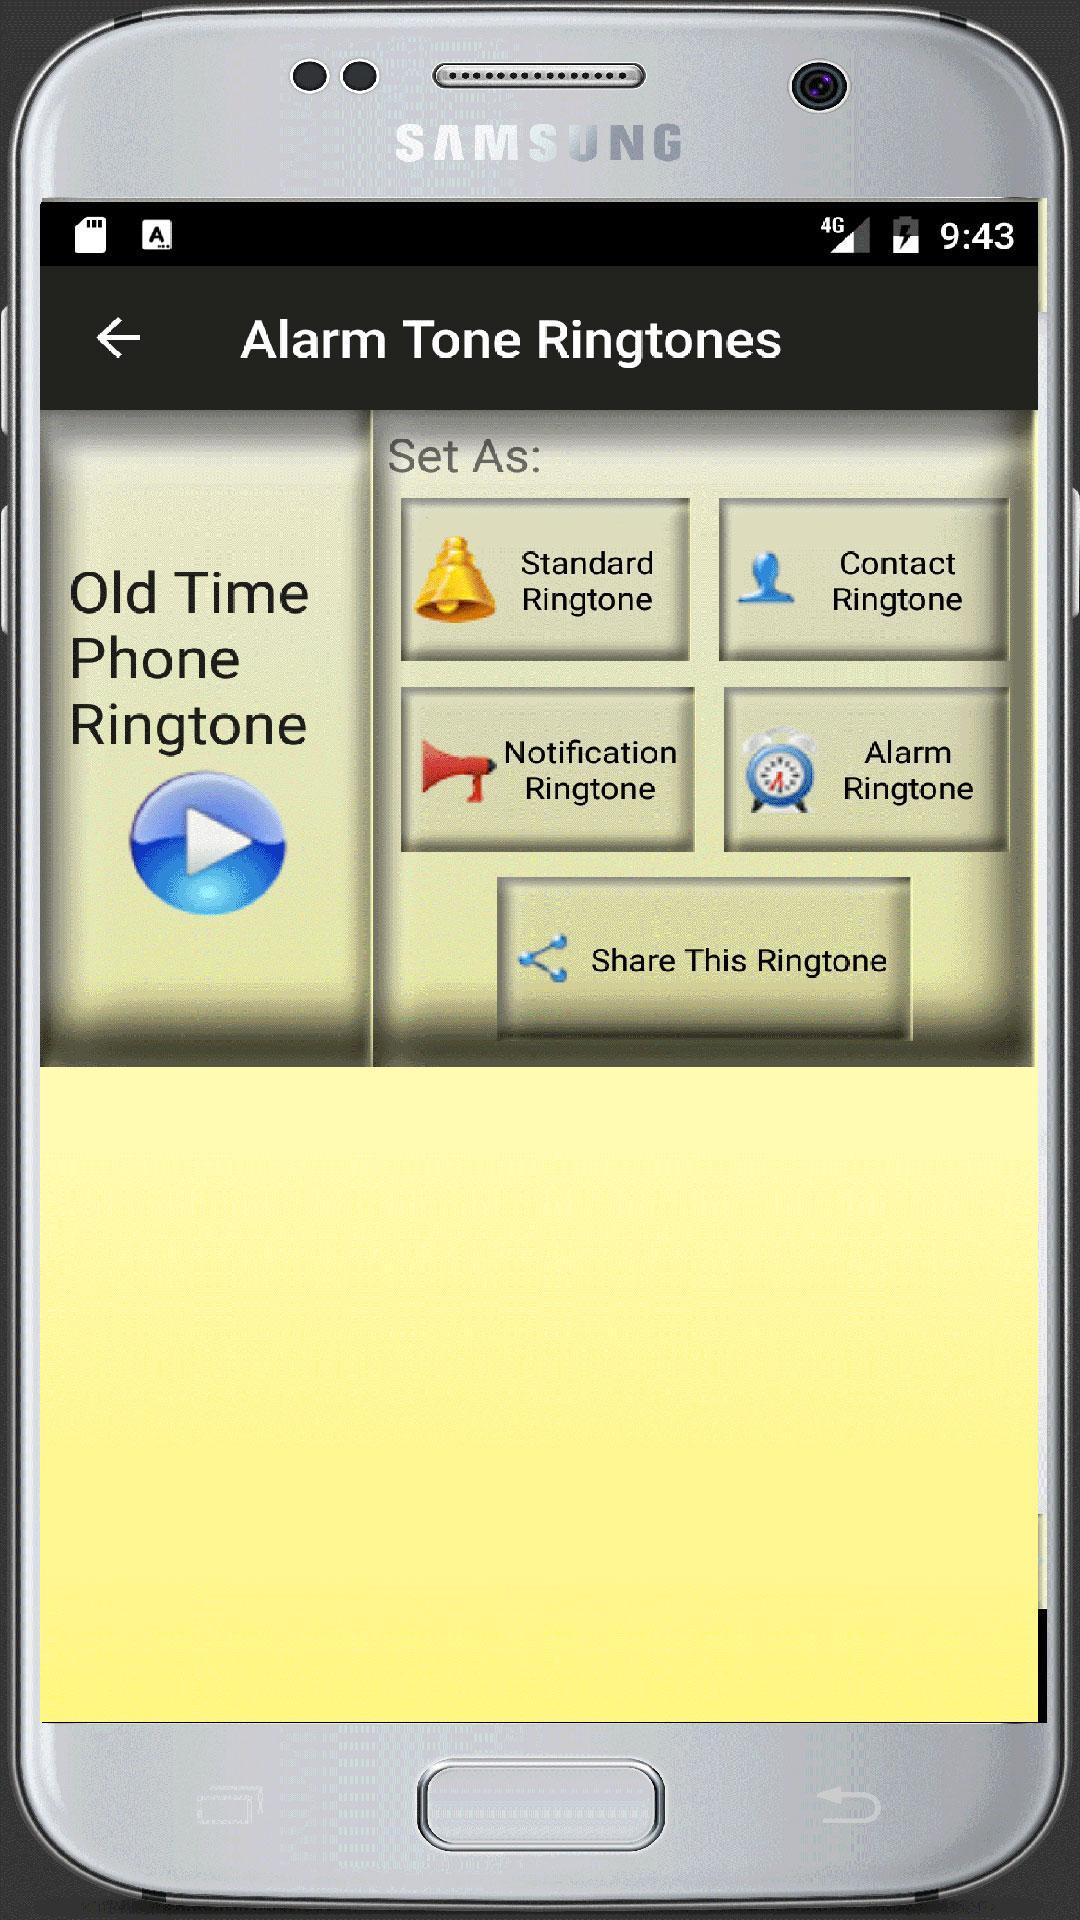 Alarm Ringtones Free Ringtones Contact Tones For Android Apk Download - roblox fire alarm voice evac alarm tornado alarm and